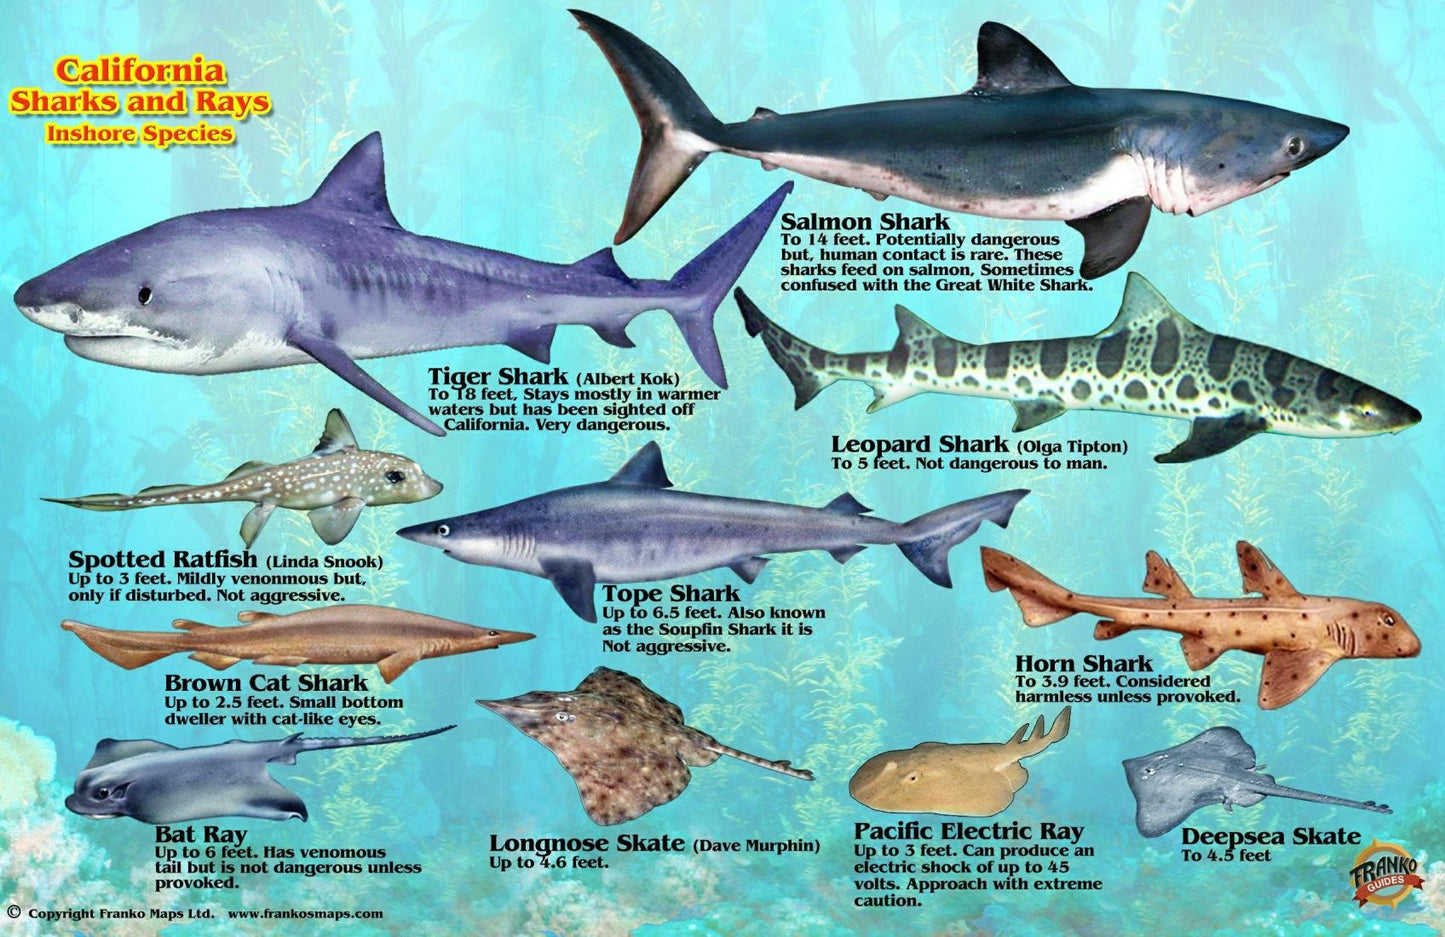 Franko's California Sharks & Rays Identification Card